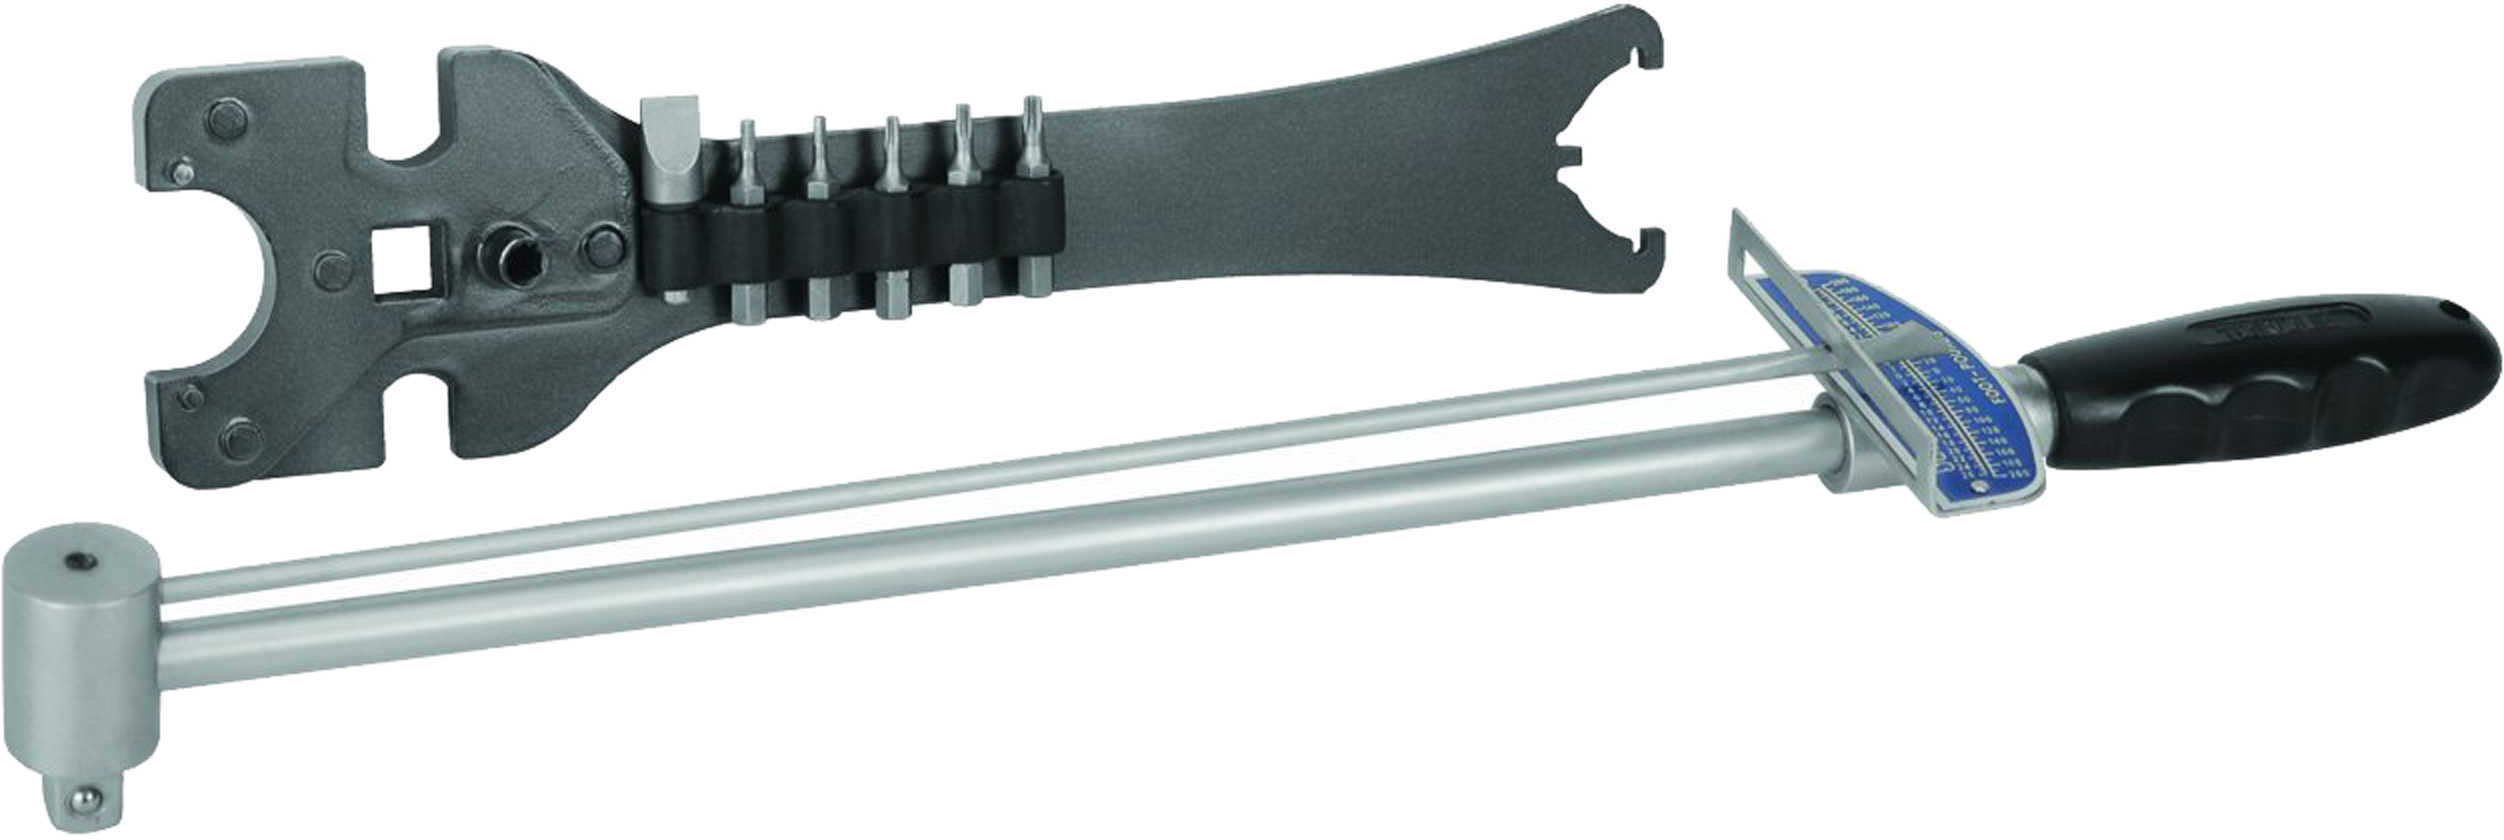 Wheeler AR Combo Tool W/Torque Wrench